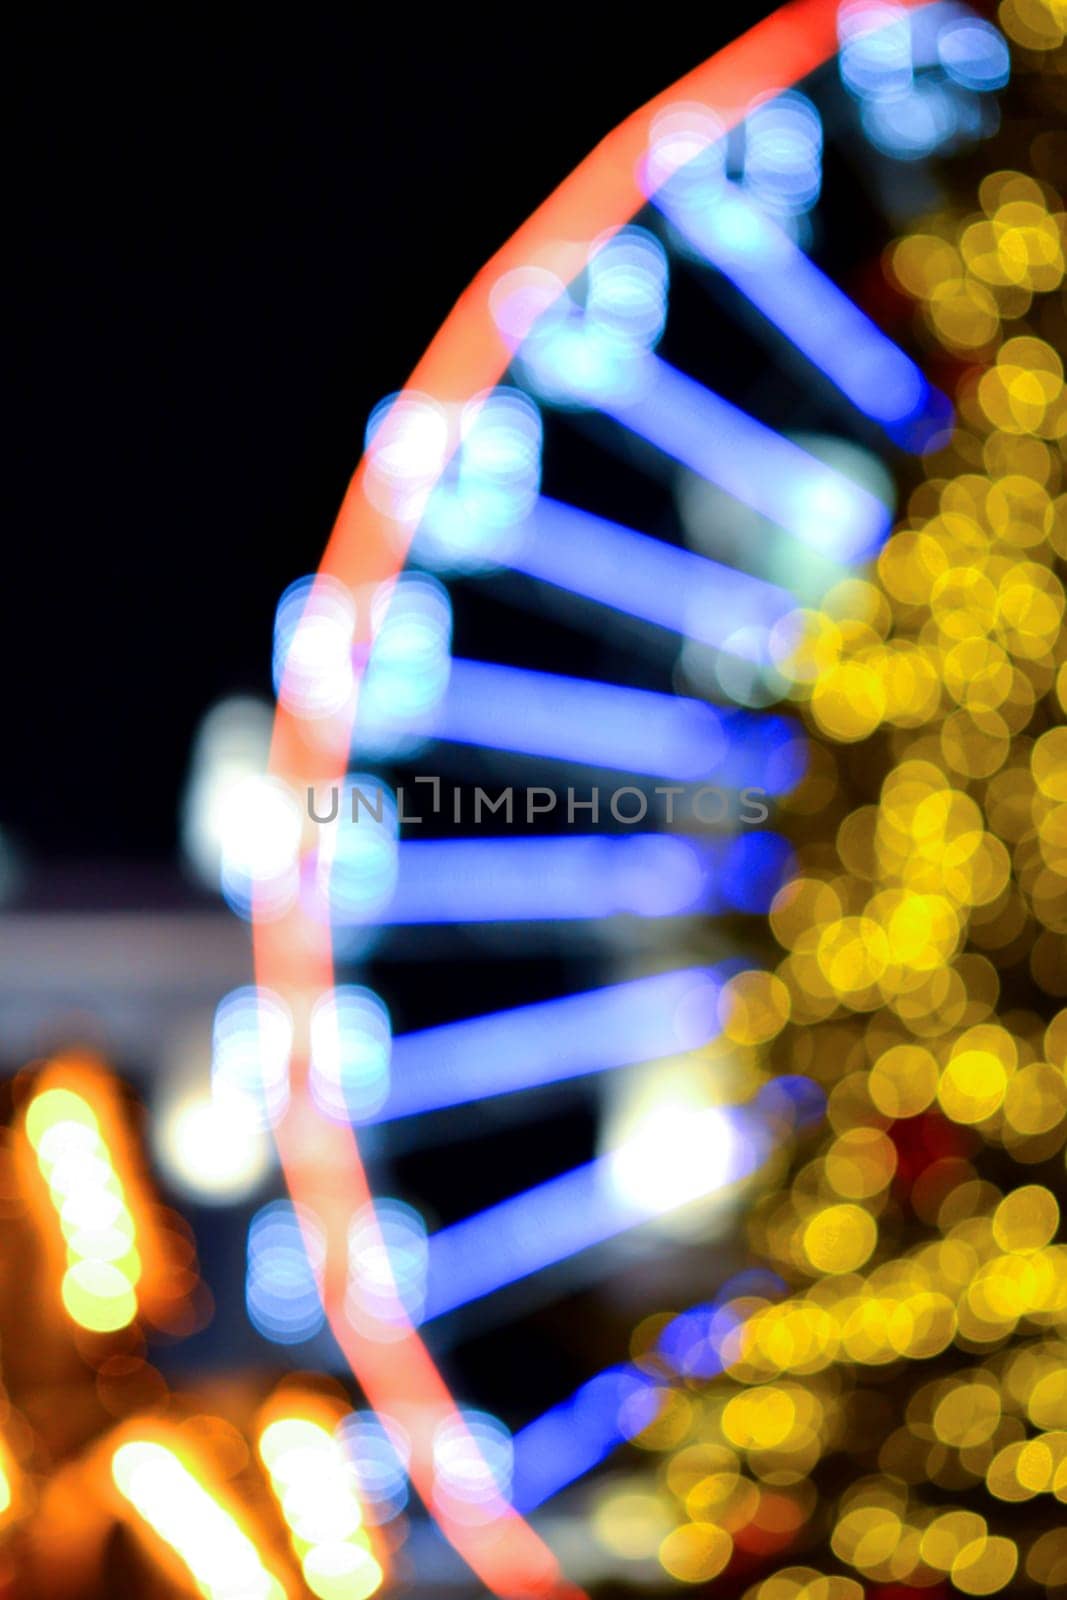 Ferris wheel decorated blue illumination and large Christmas tree decorated yellow illumination on black background at night. Beautiful New Year and Christmas holiday blurred background